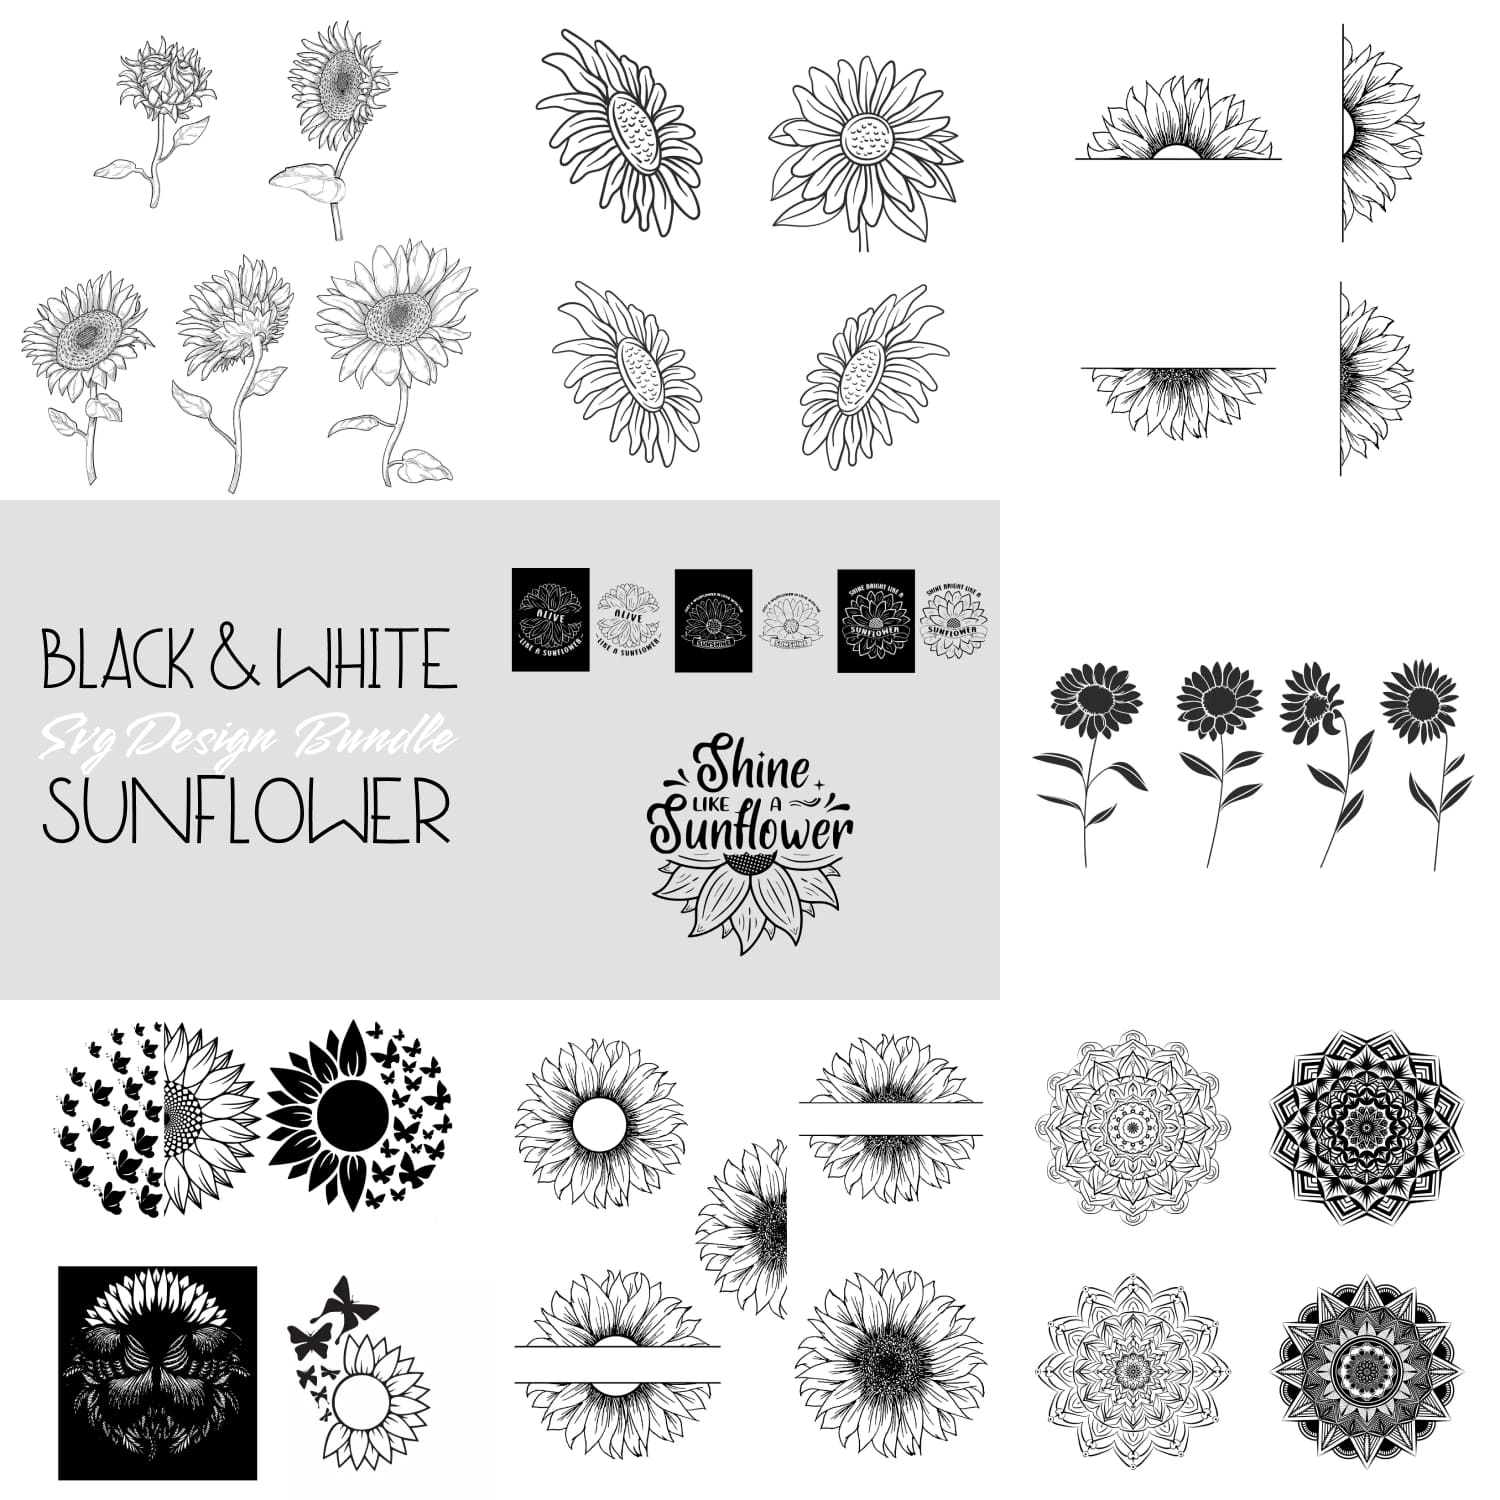 Black & White Sunflower SVG Designs Bundle - main image preview.